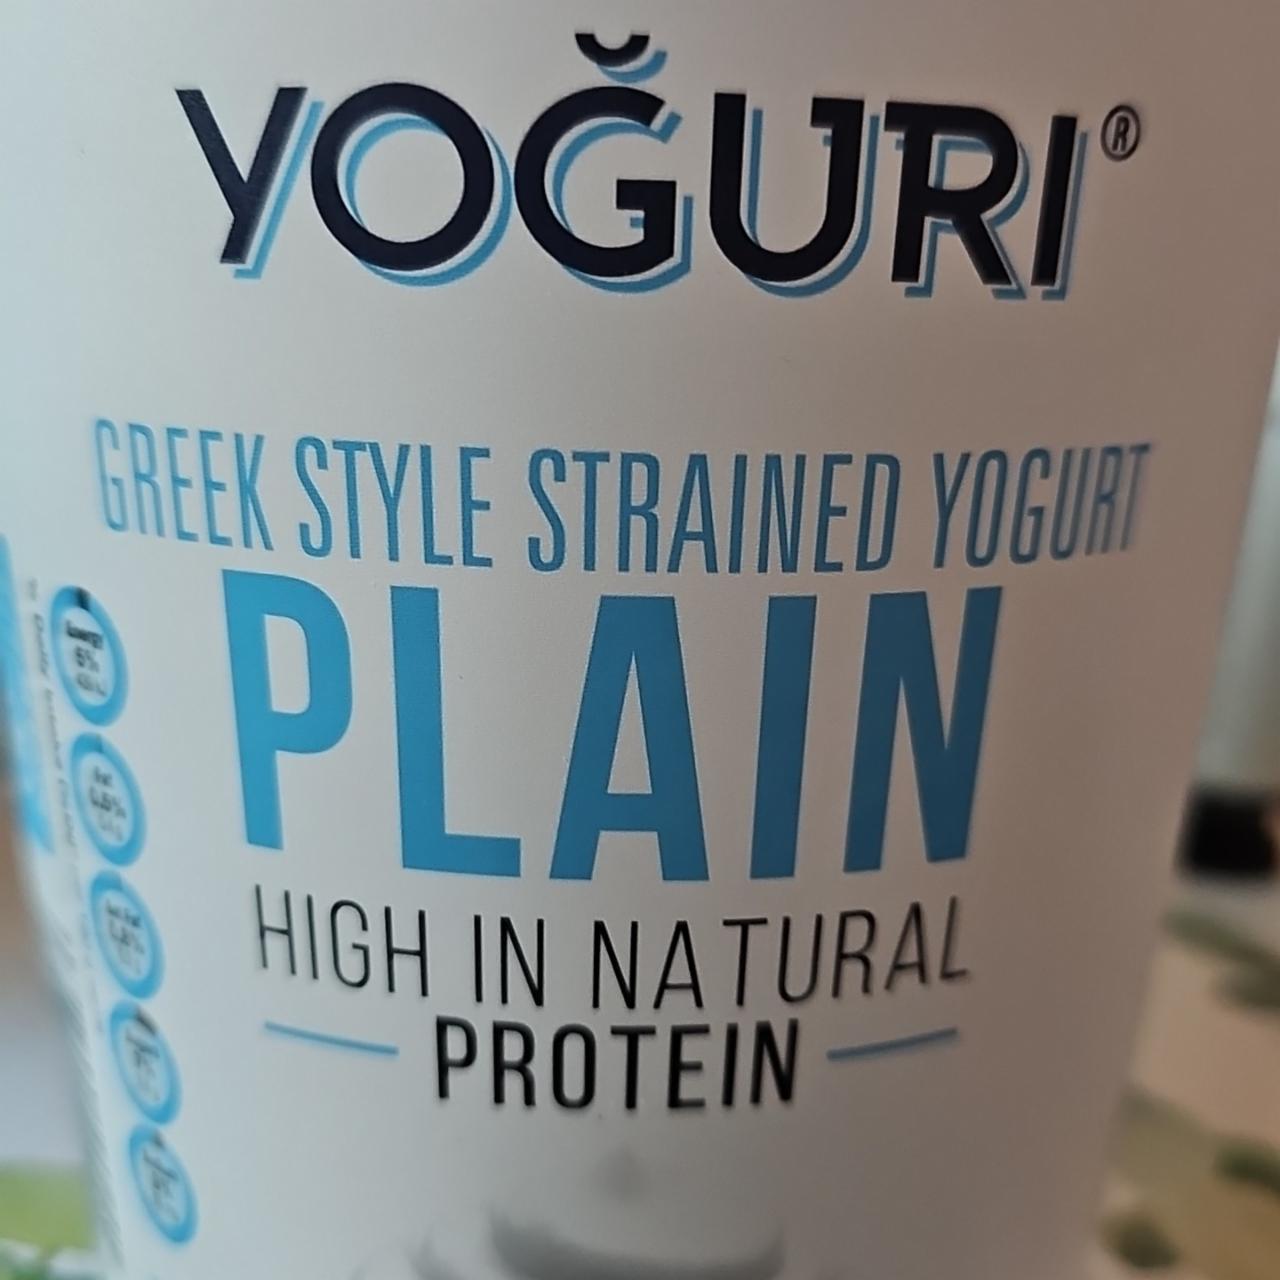 Fotografie - Greek style strained yogurt high in natural protein Yoguri